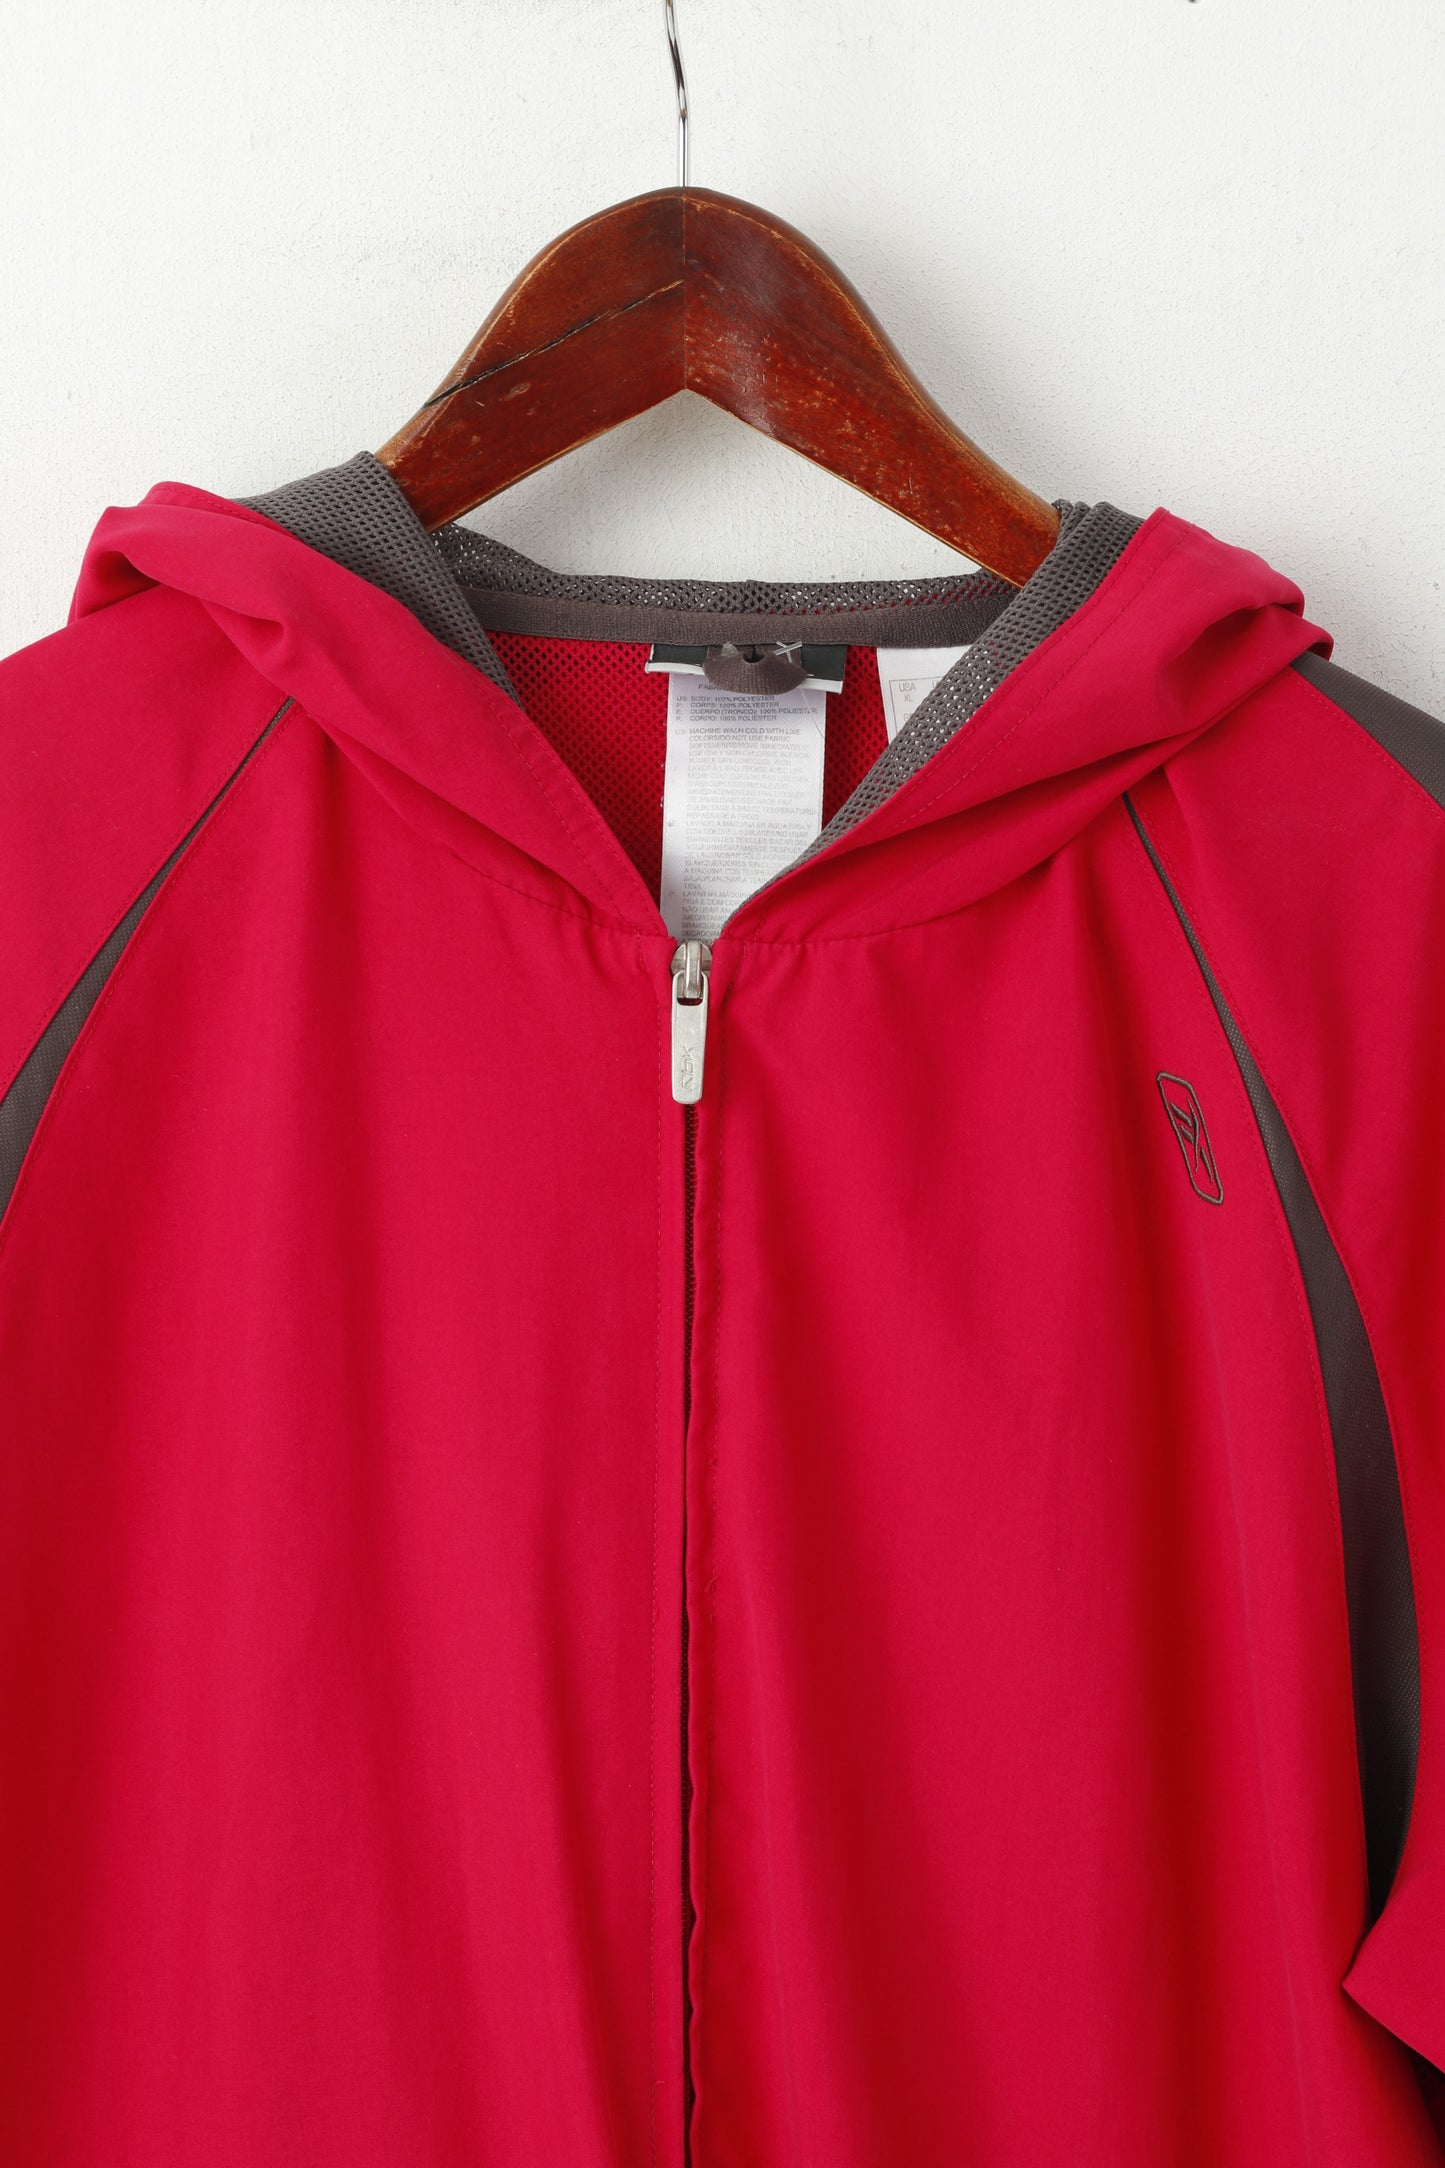 Reebok Women 16 XL Jacket Raspberry Activewear Hooded Zip Up Sport Track Top